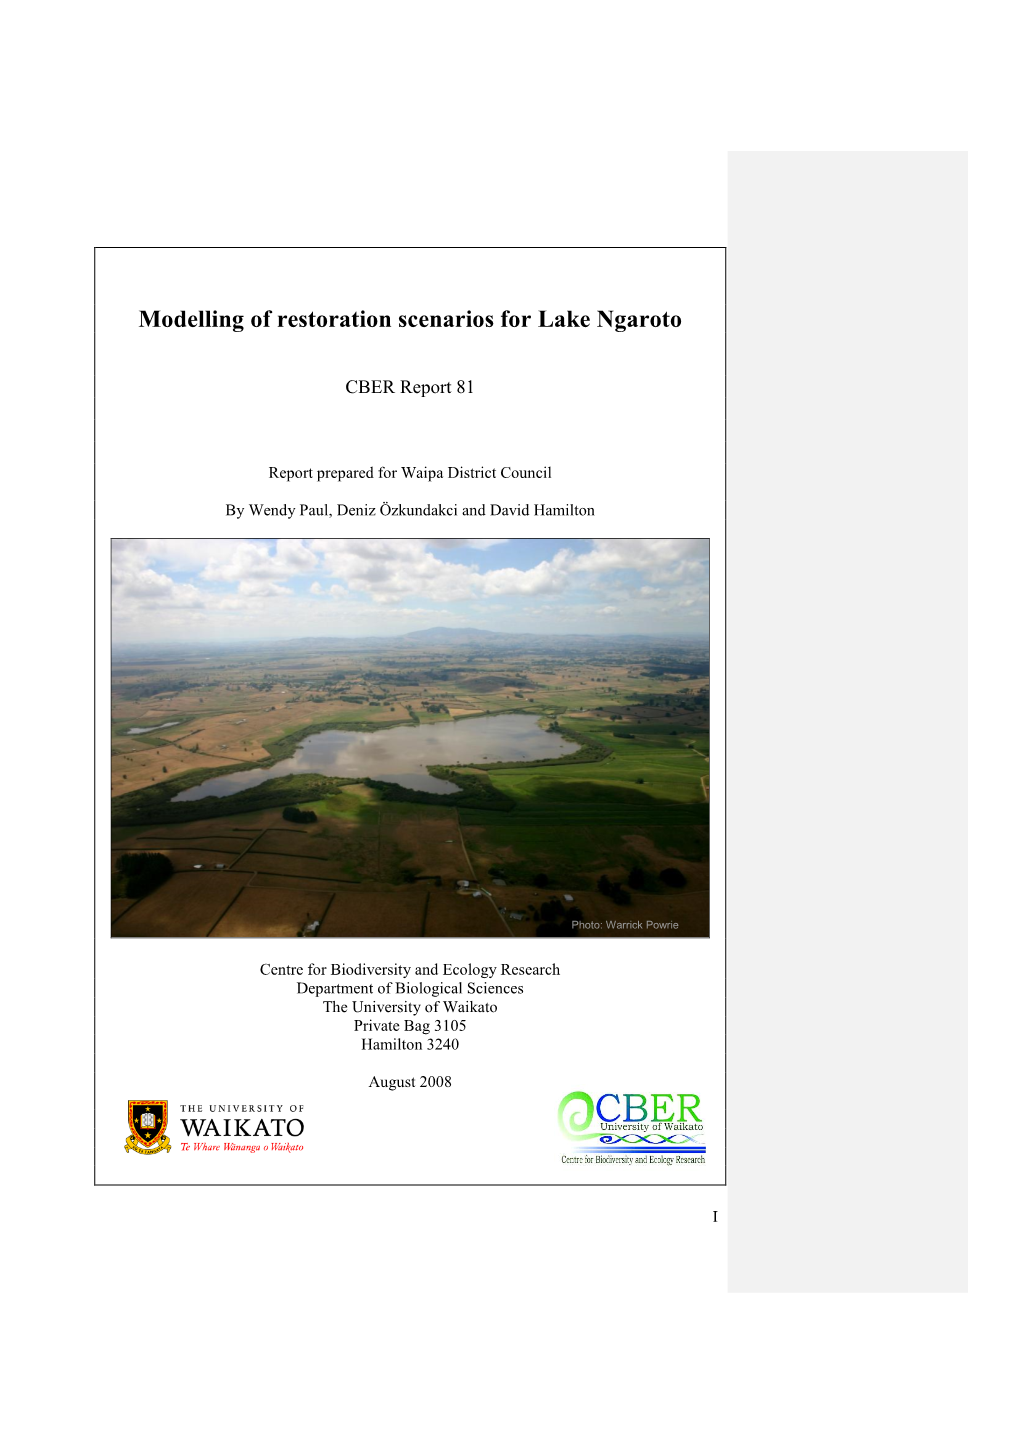 Modelling of Restoration Scenarios for Lake Ngaroto